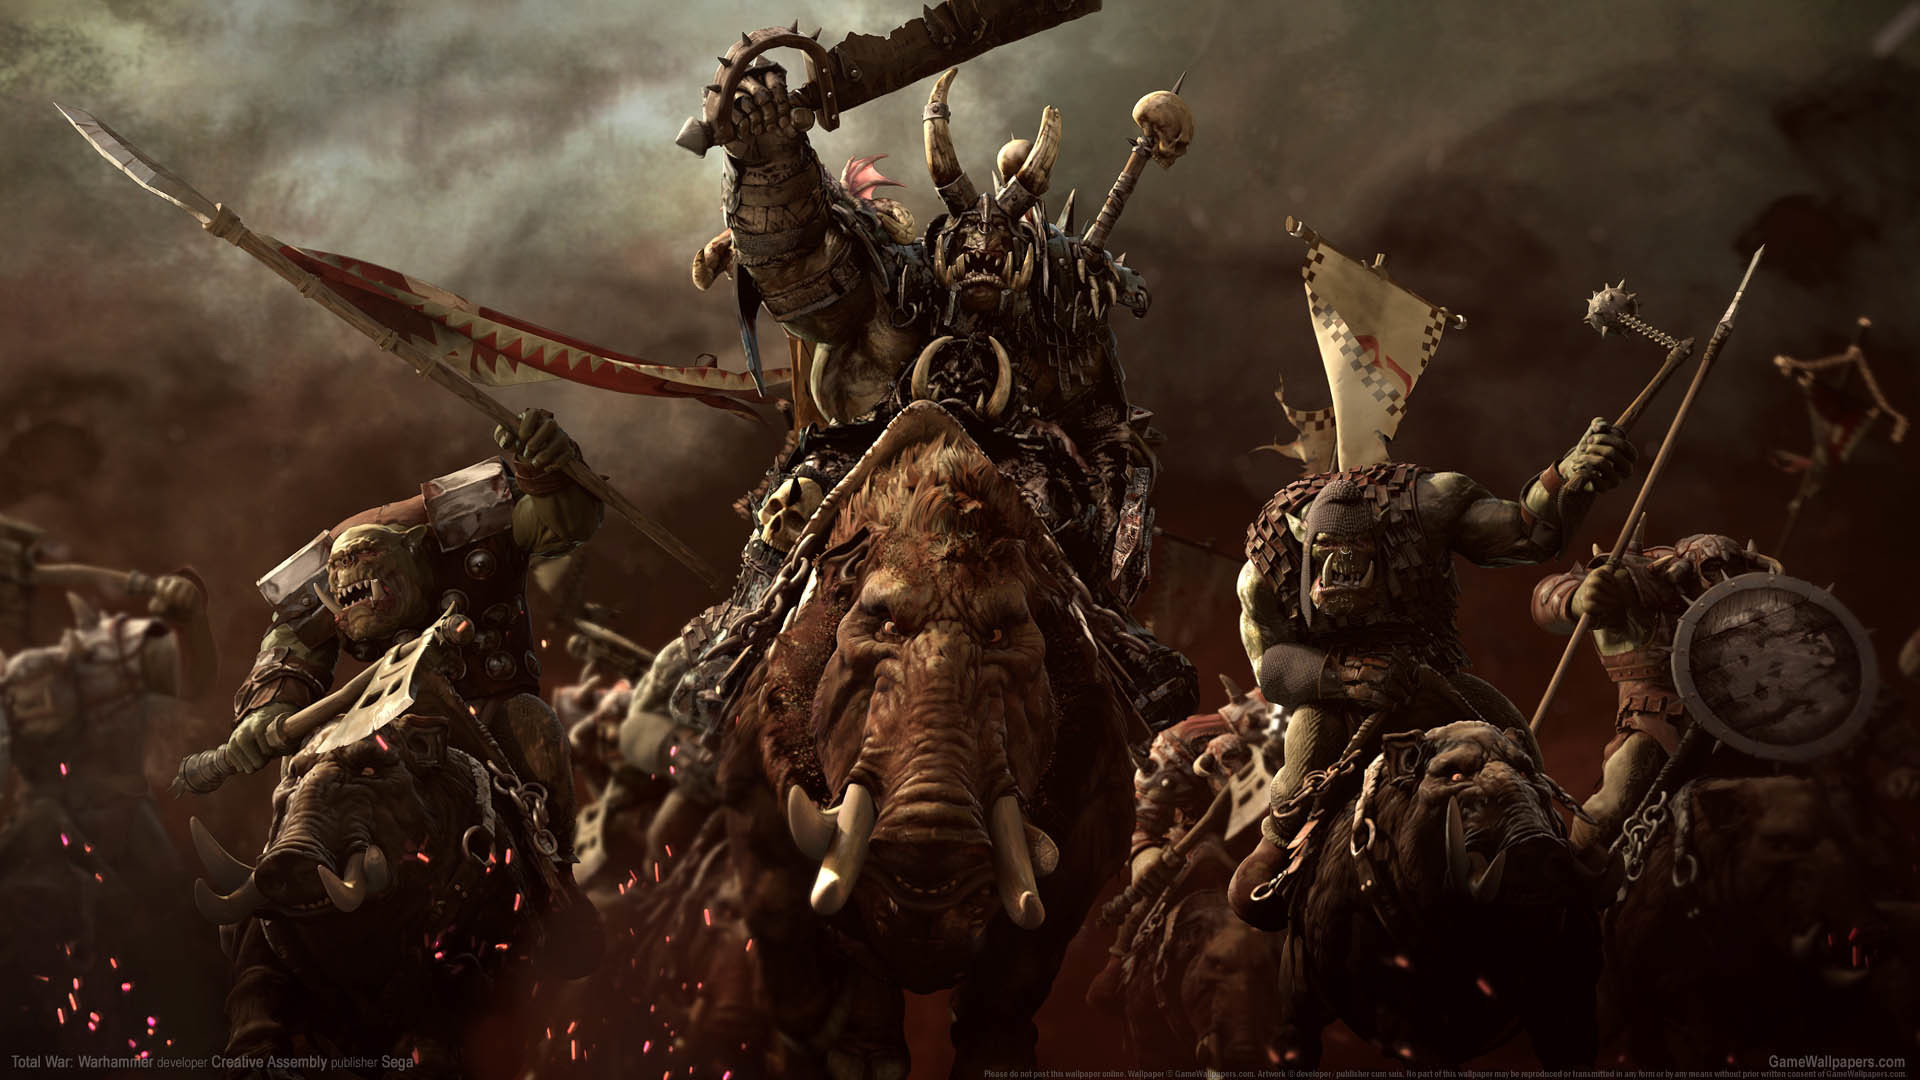 1920x1080 ... Total War: Warhammer wallpaper or background 01